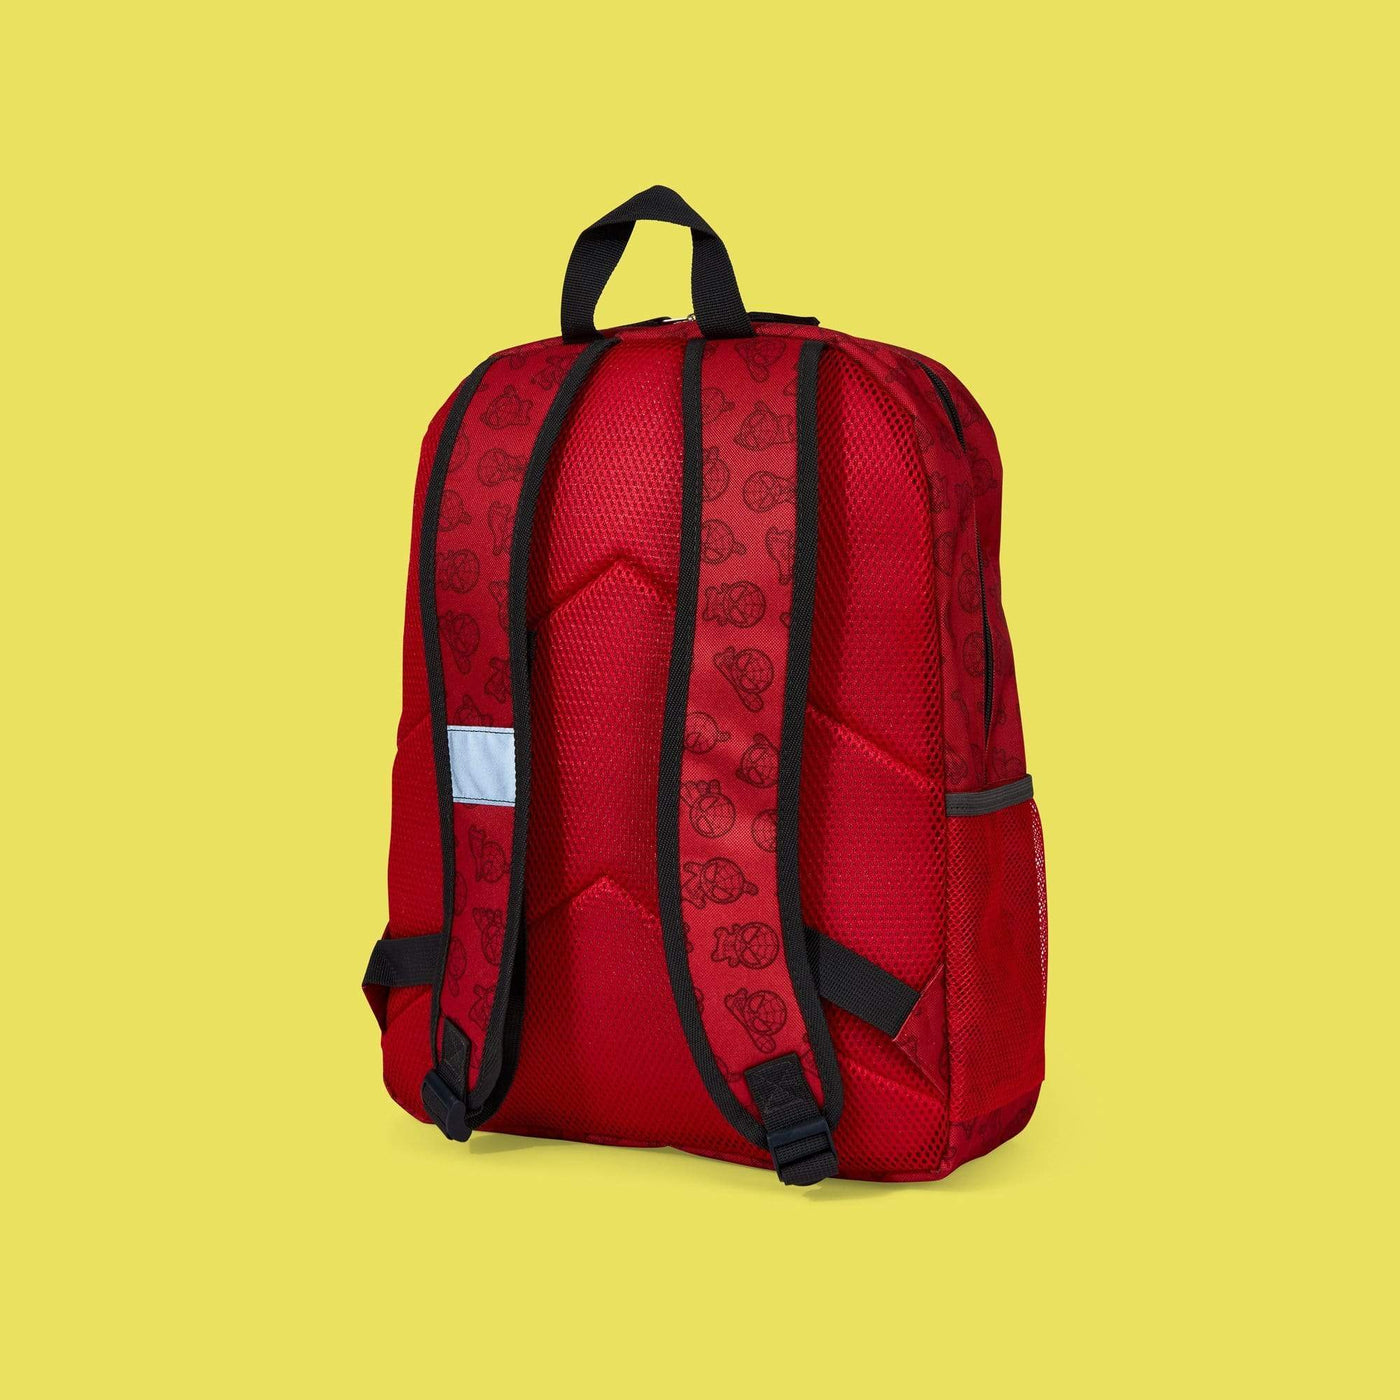 back of red Spider-Man backpack showing red mesh side pocket.  Back is solid red with Spider-Man print on back straps